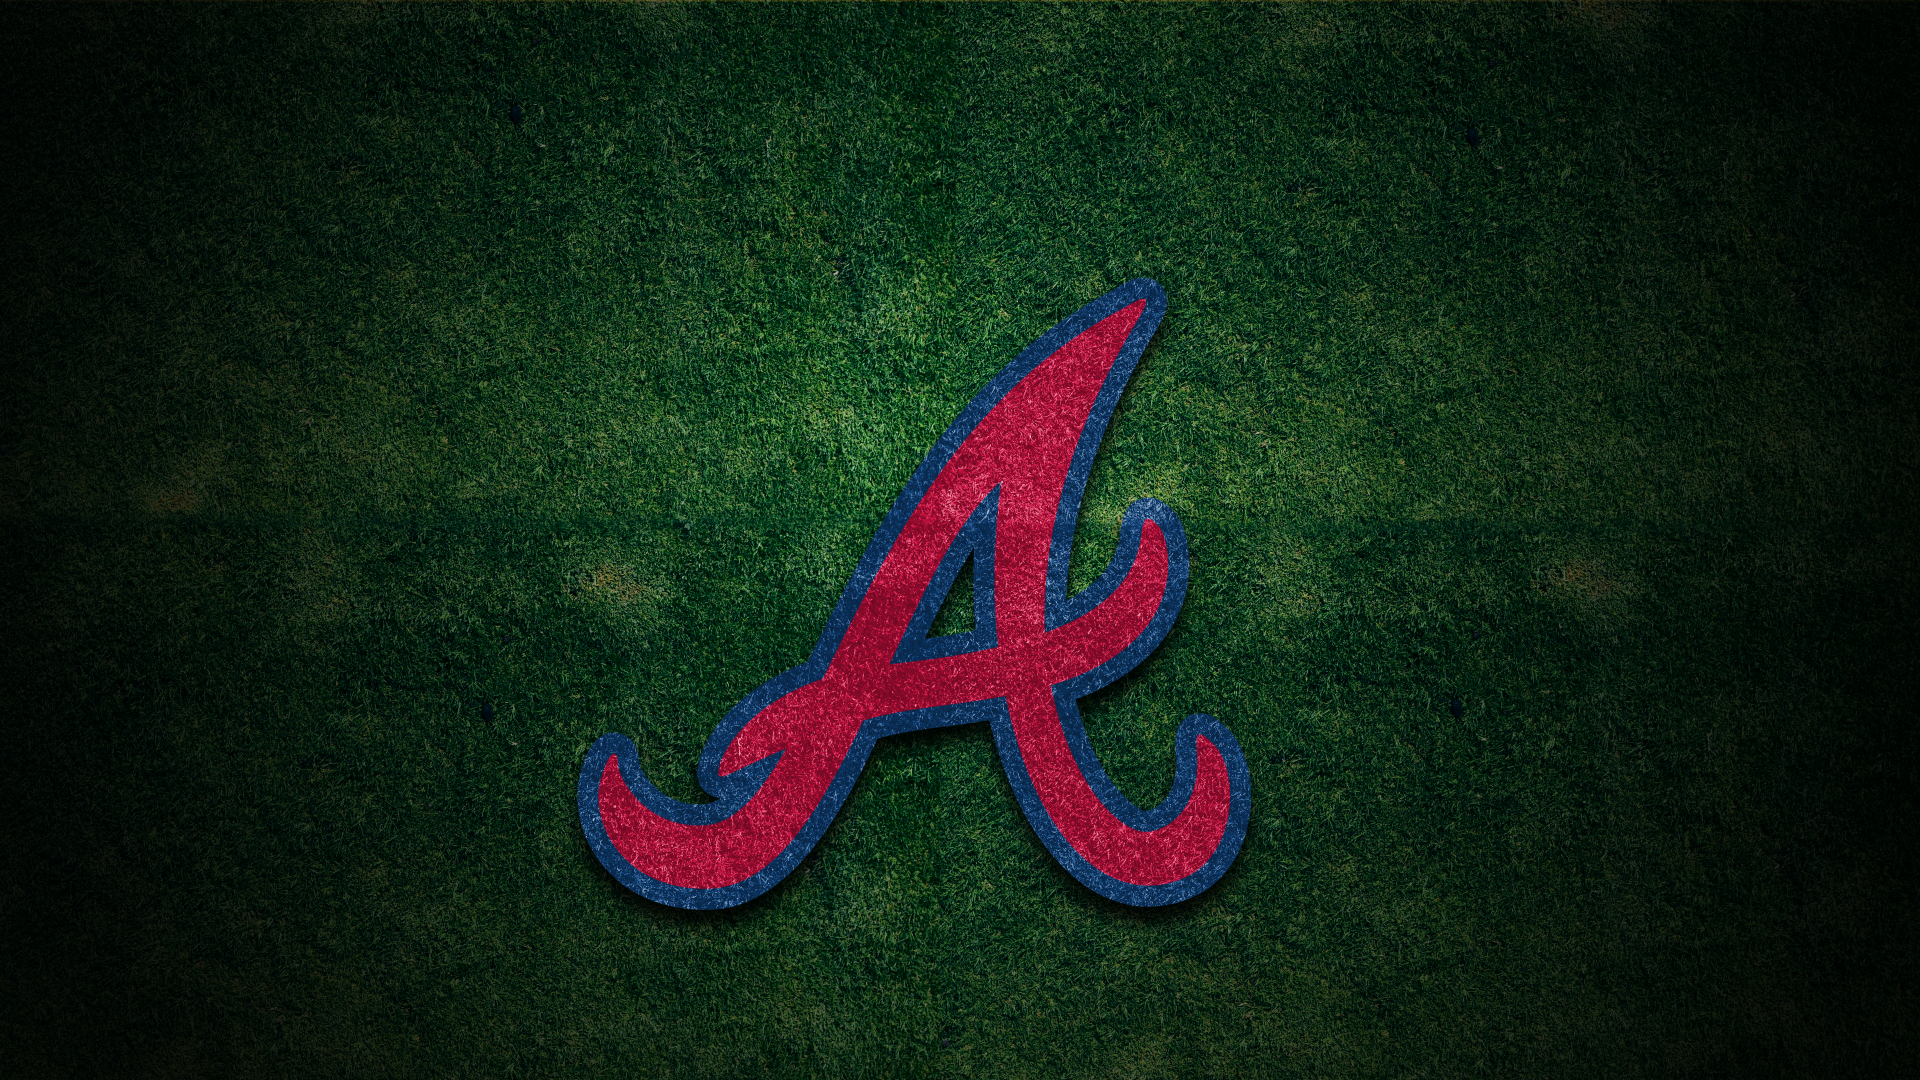 Sports Atlanta Braves 4k Ultra HD Wallpaper